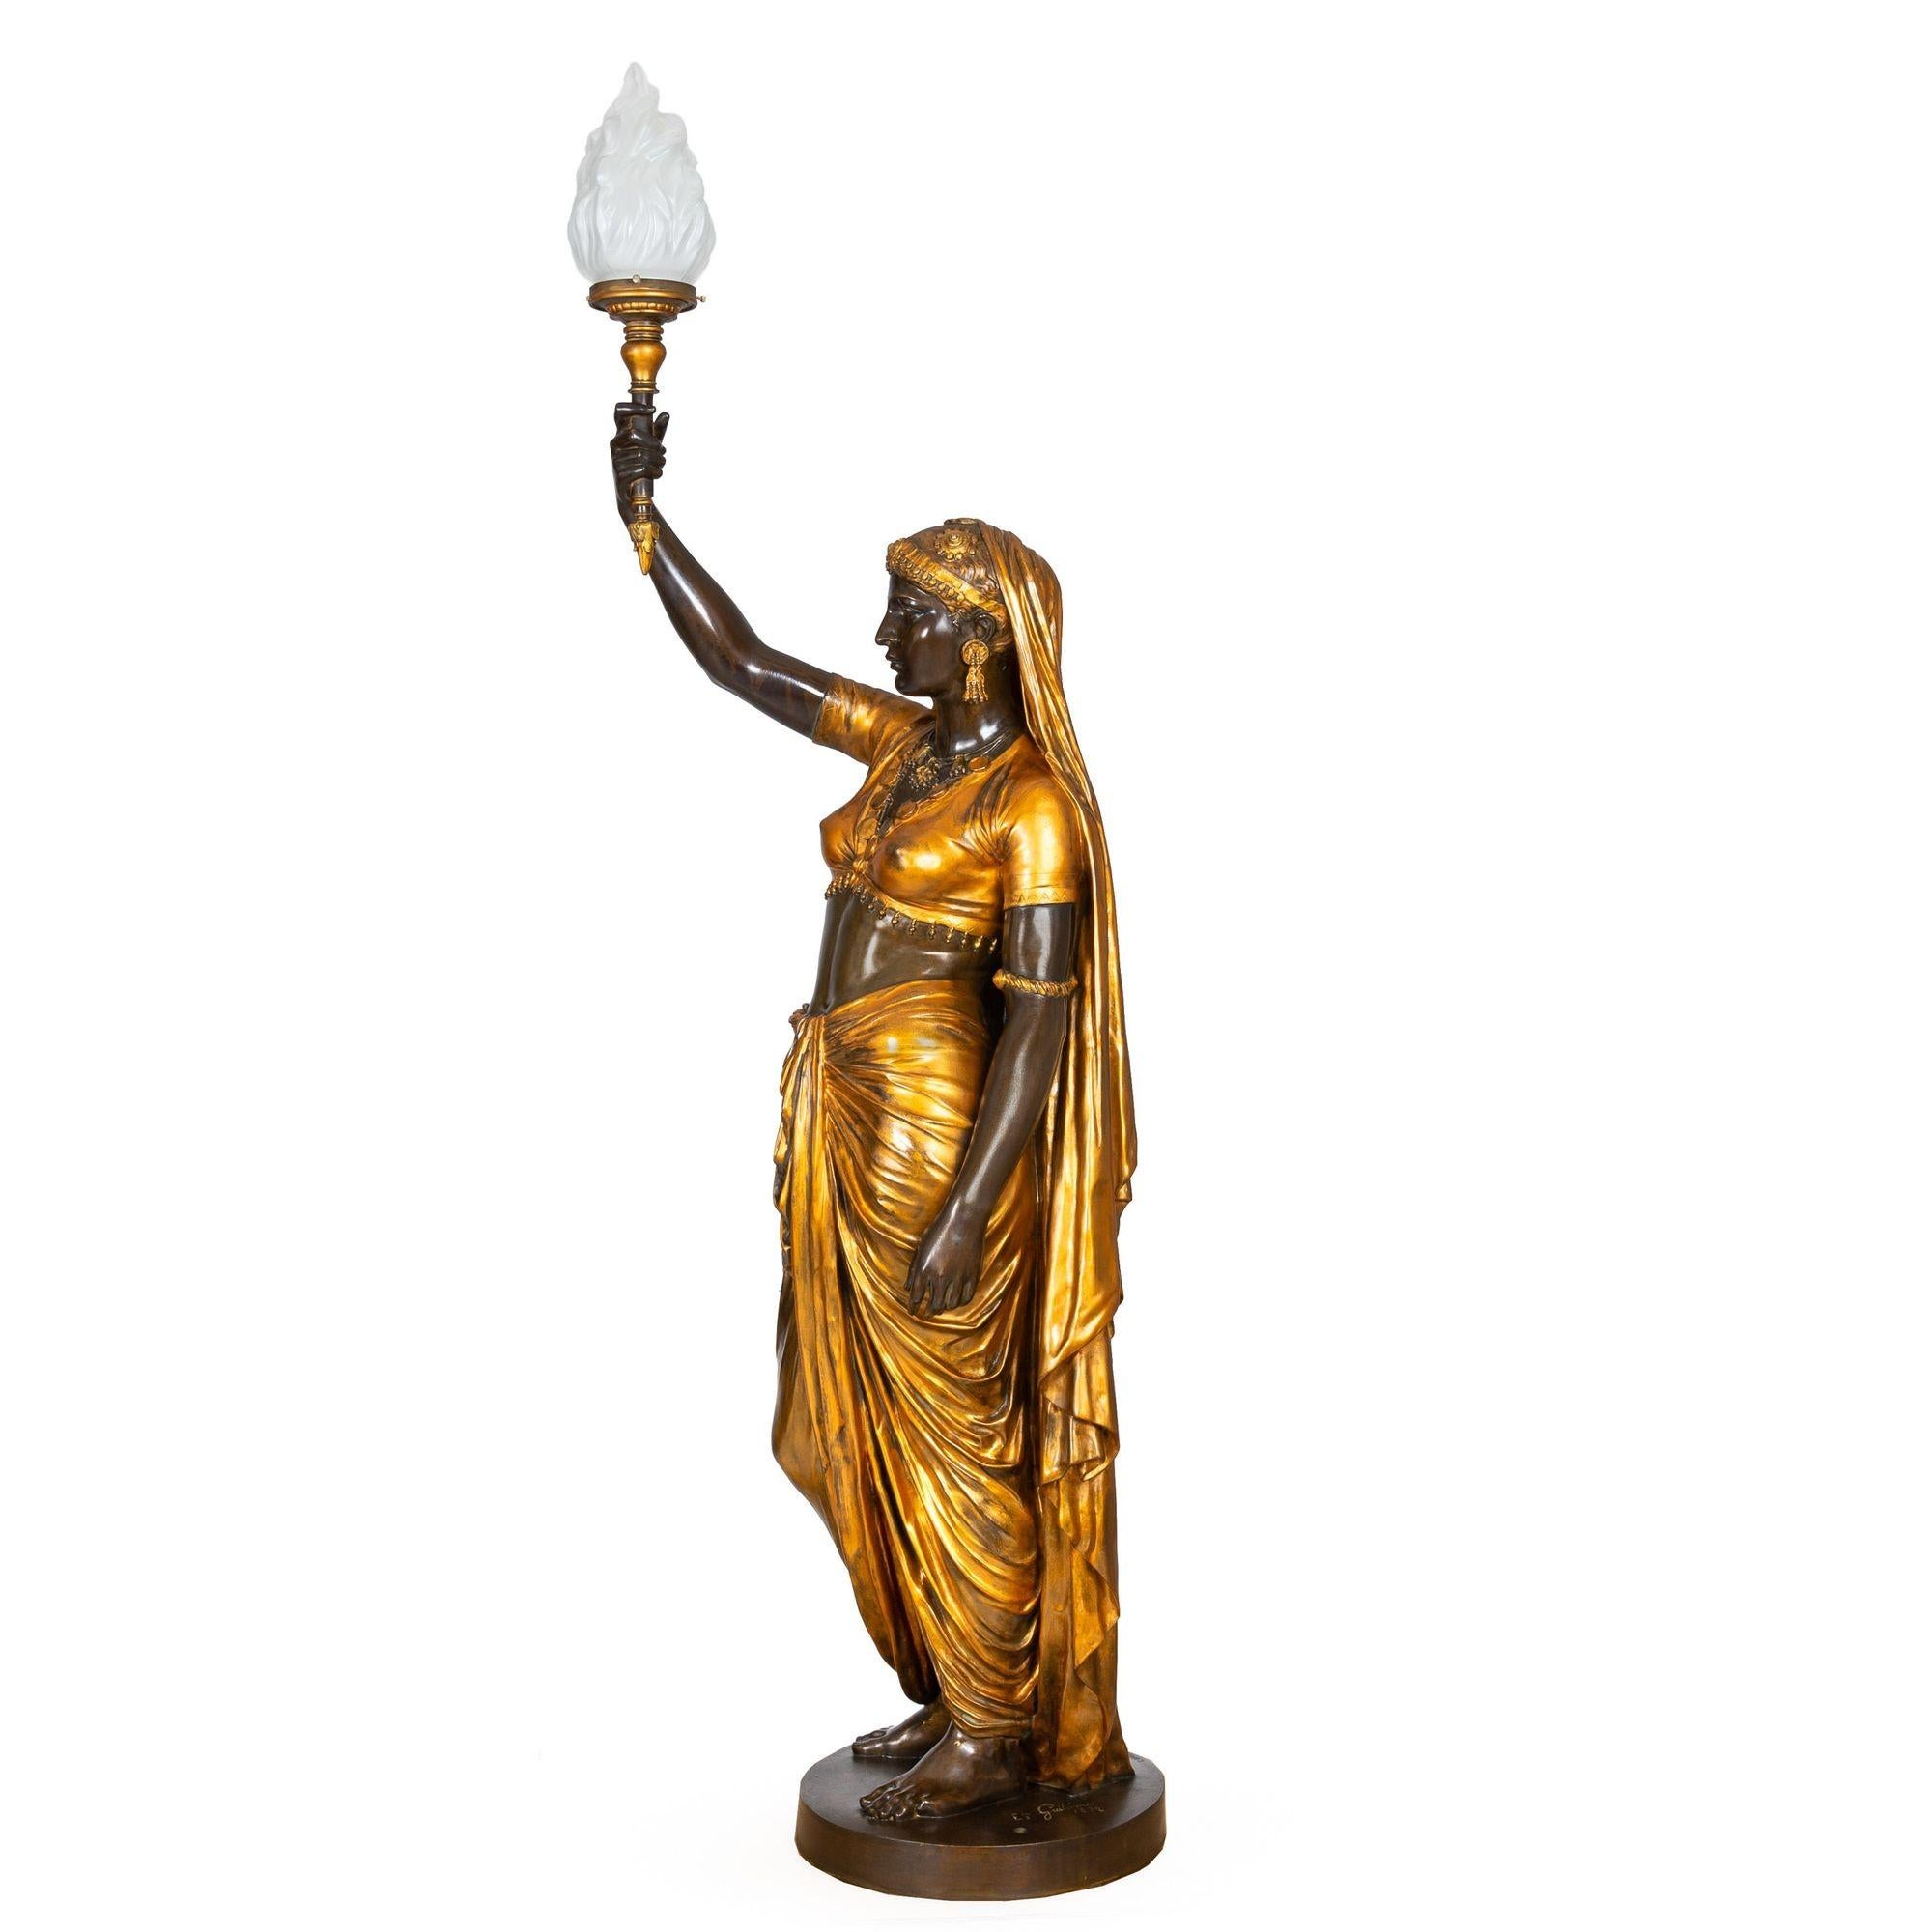 Romantic French Antique Bronze Torchiere Sculpture “Indienne Femme” by Emile Guillem